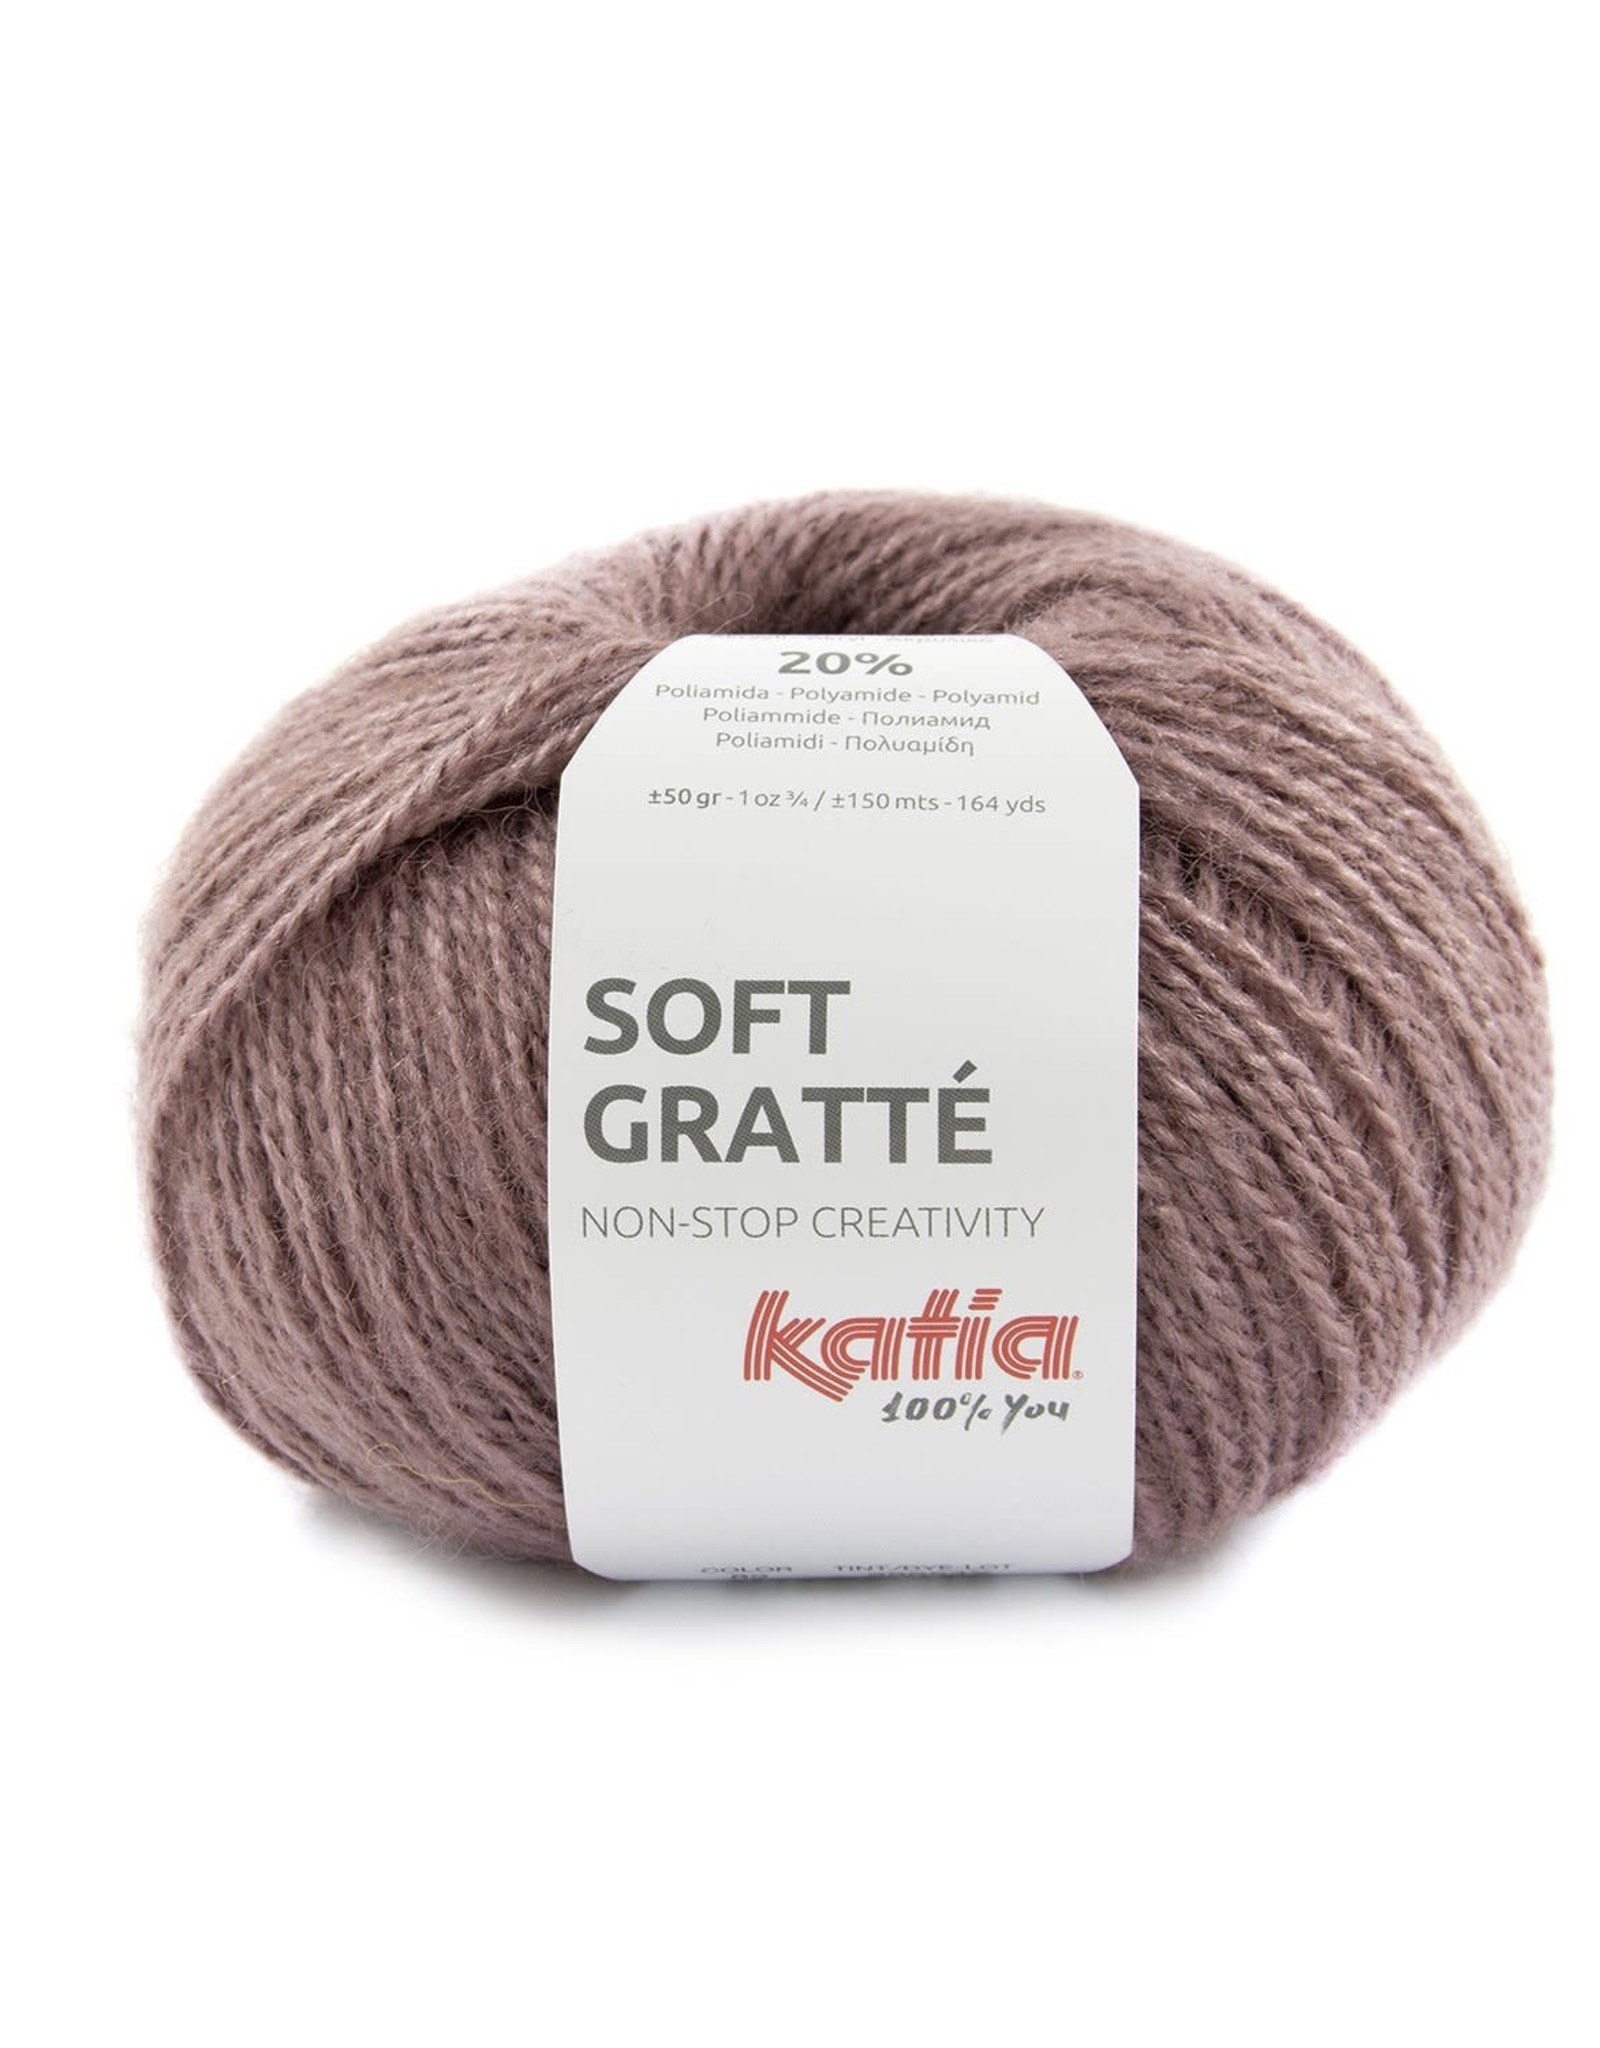 Katia Katia Soft Gratte 82 - Donker bleekrood